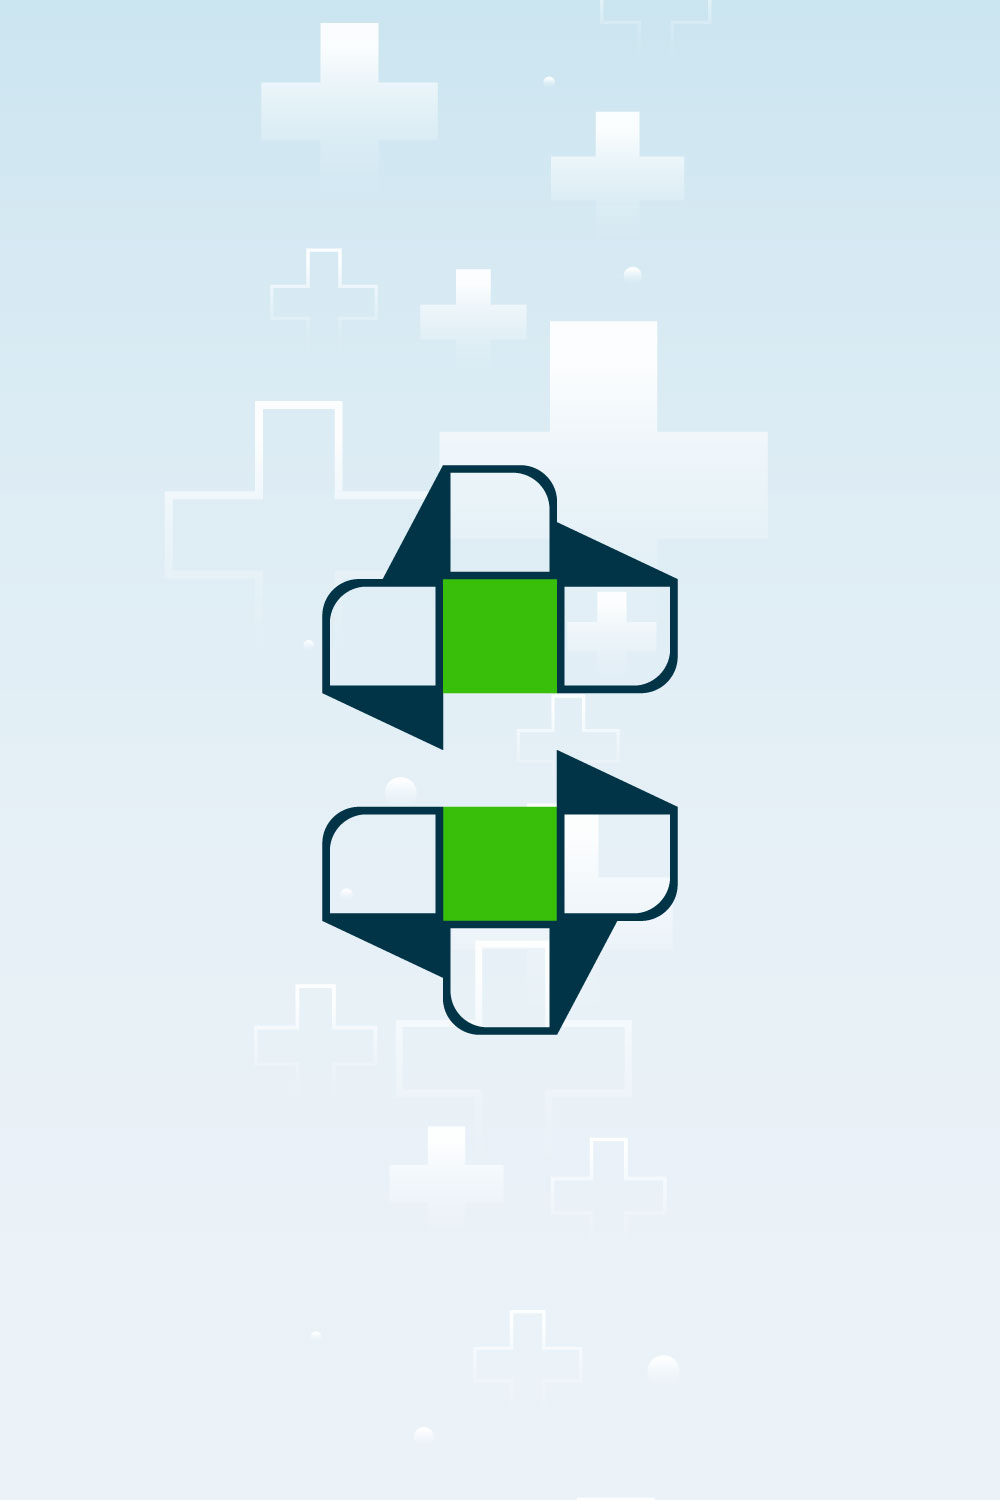 S letter medical logo pinterest image.